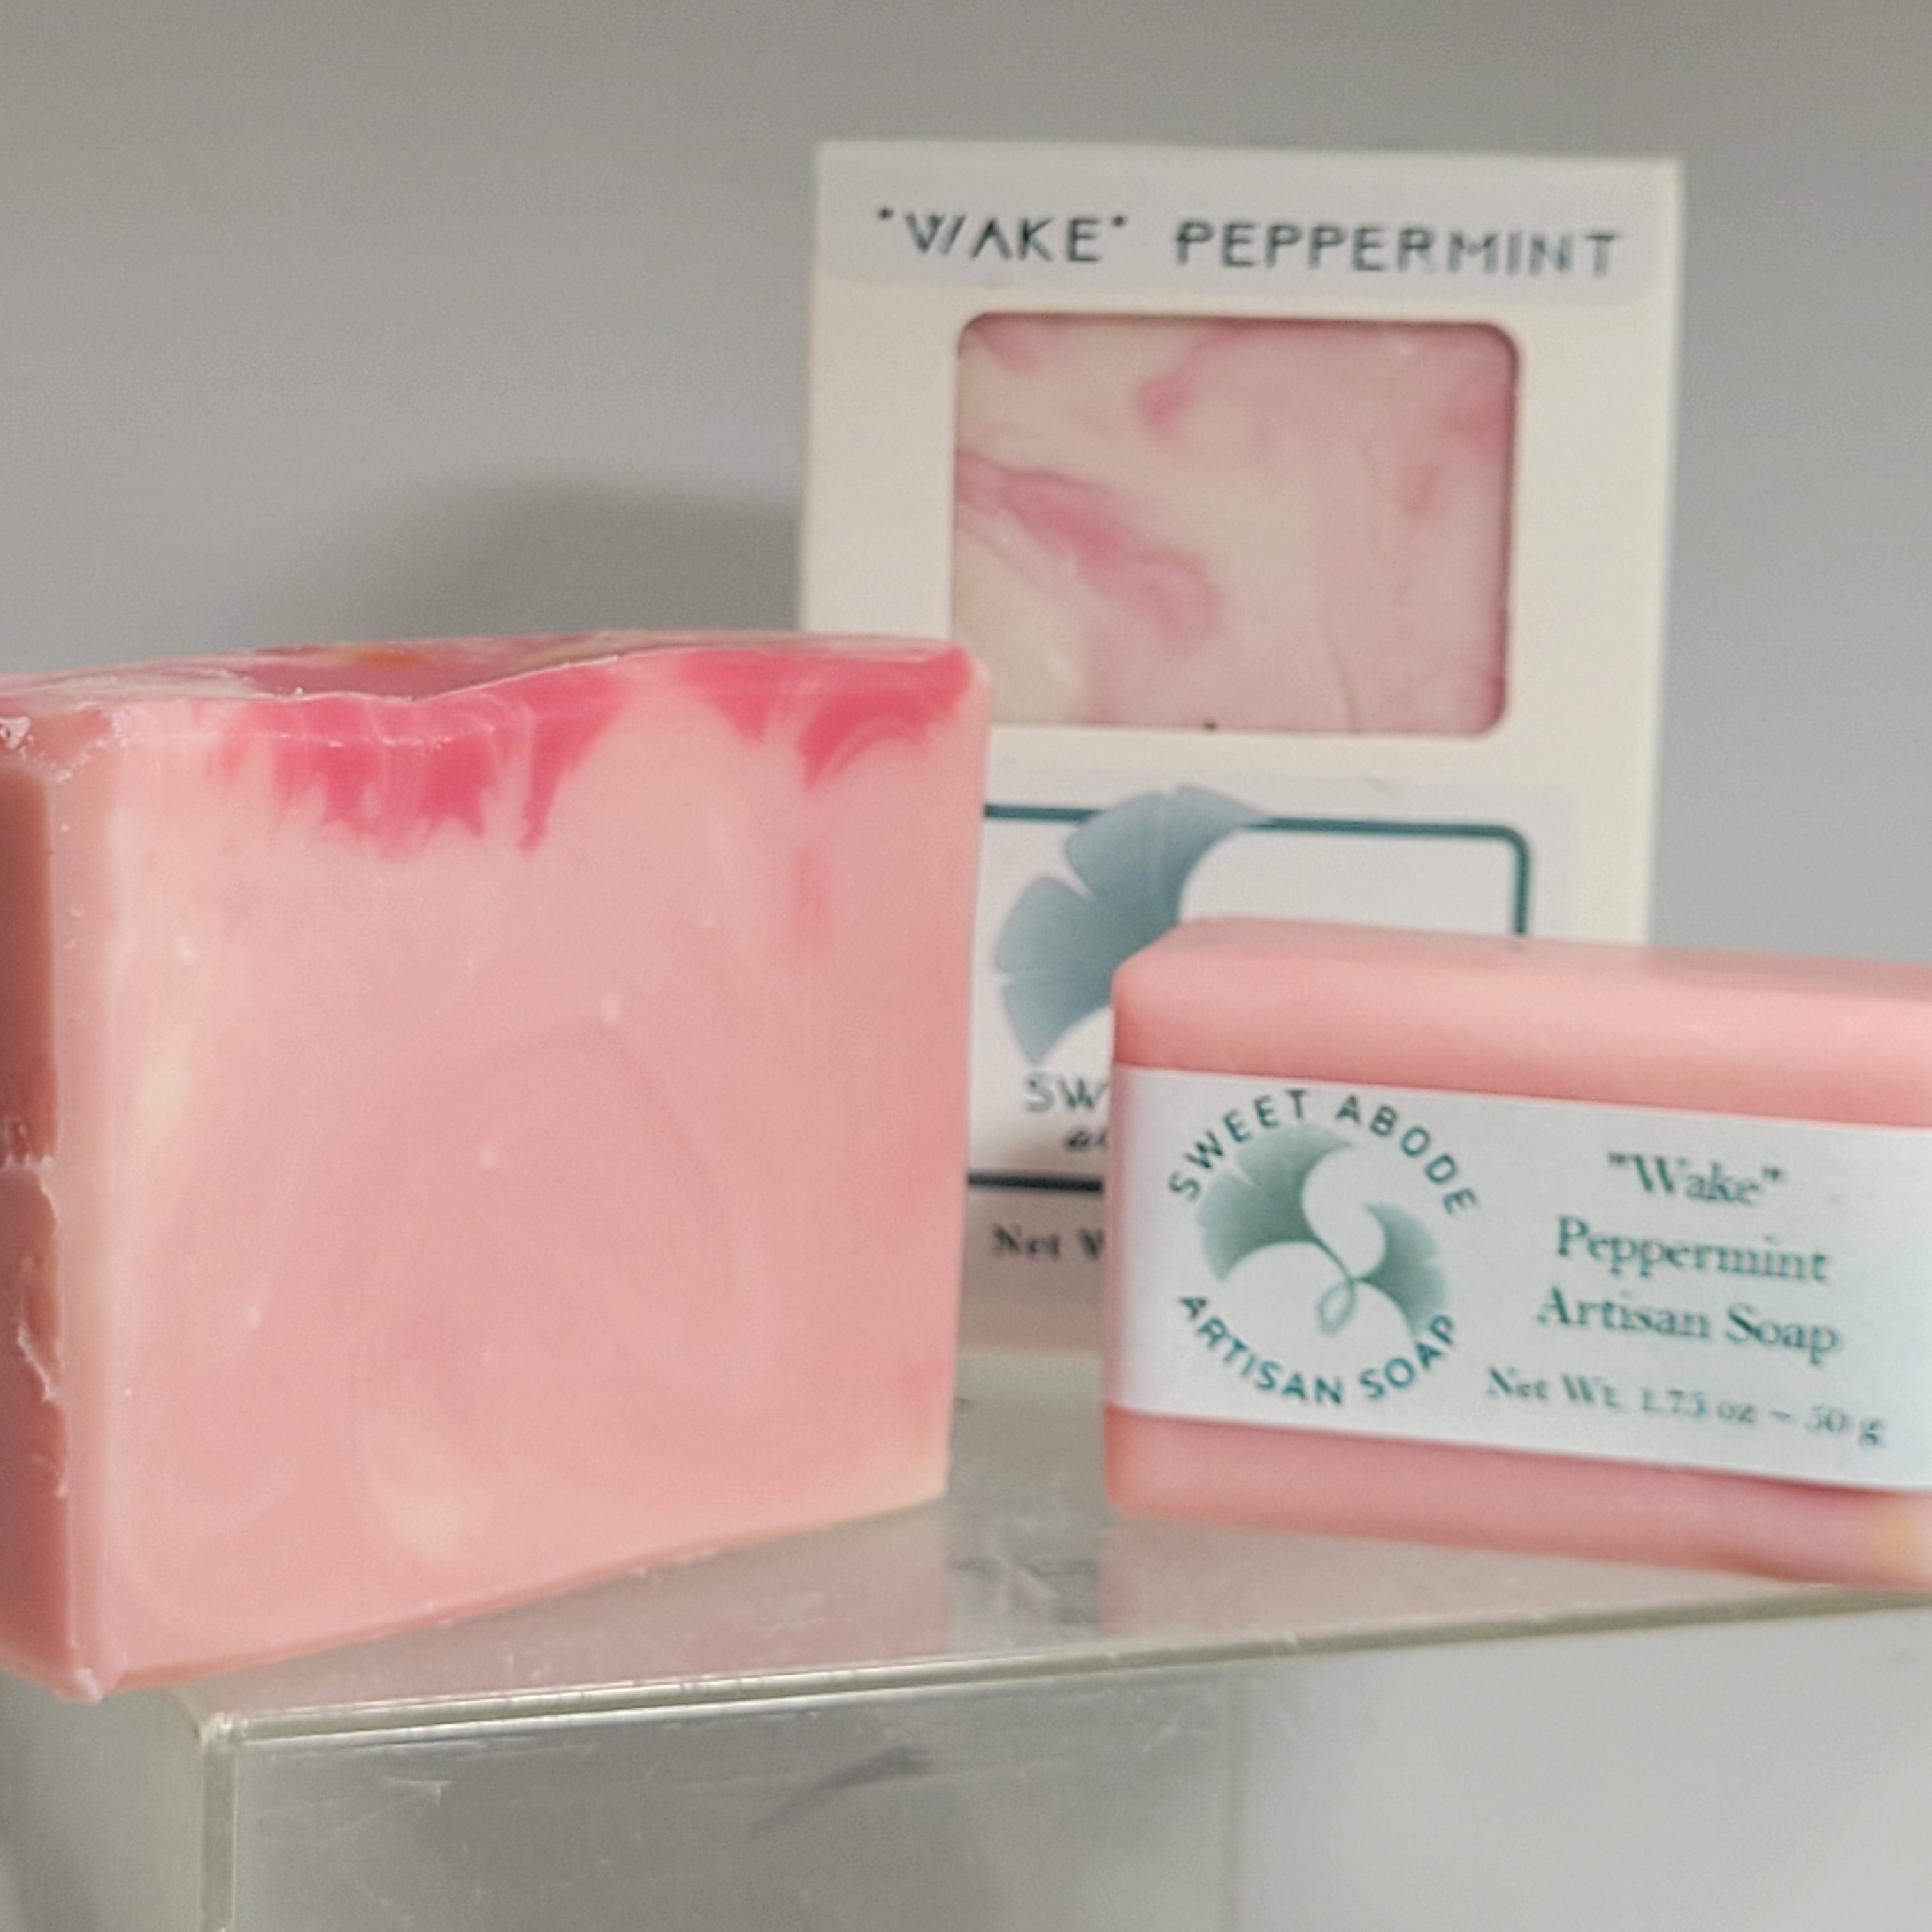 Wake Peppermint Artisan Soap